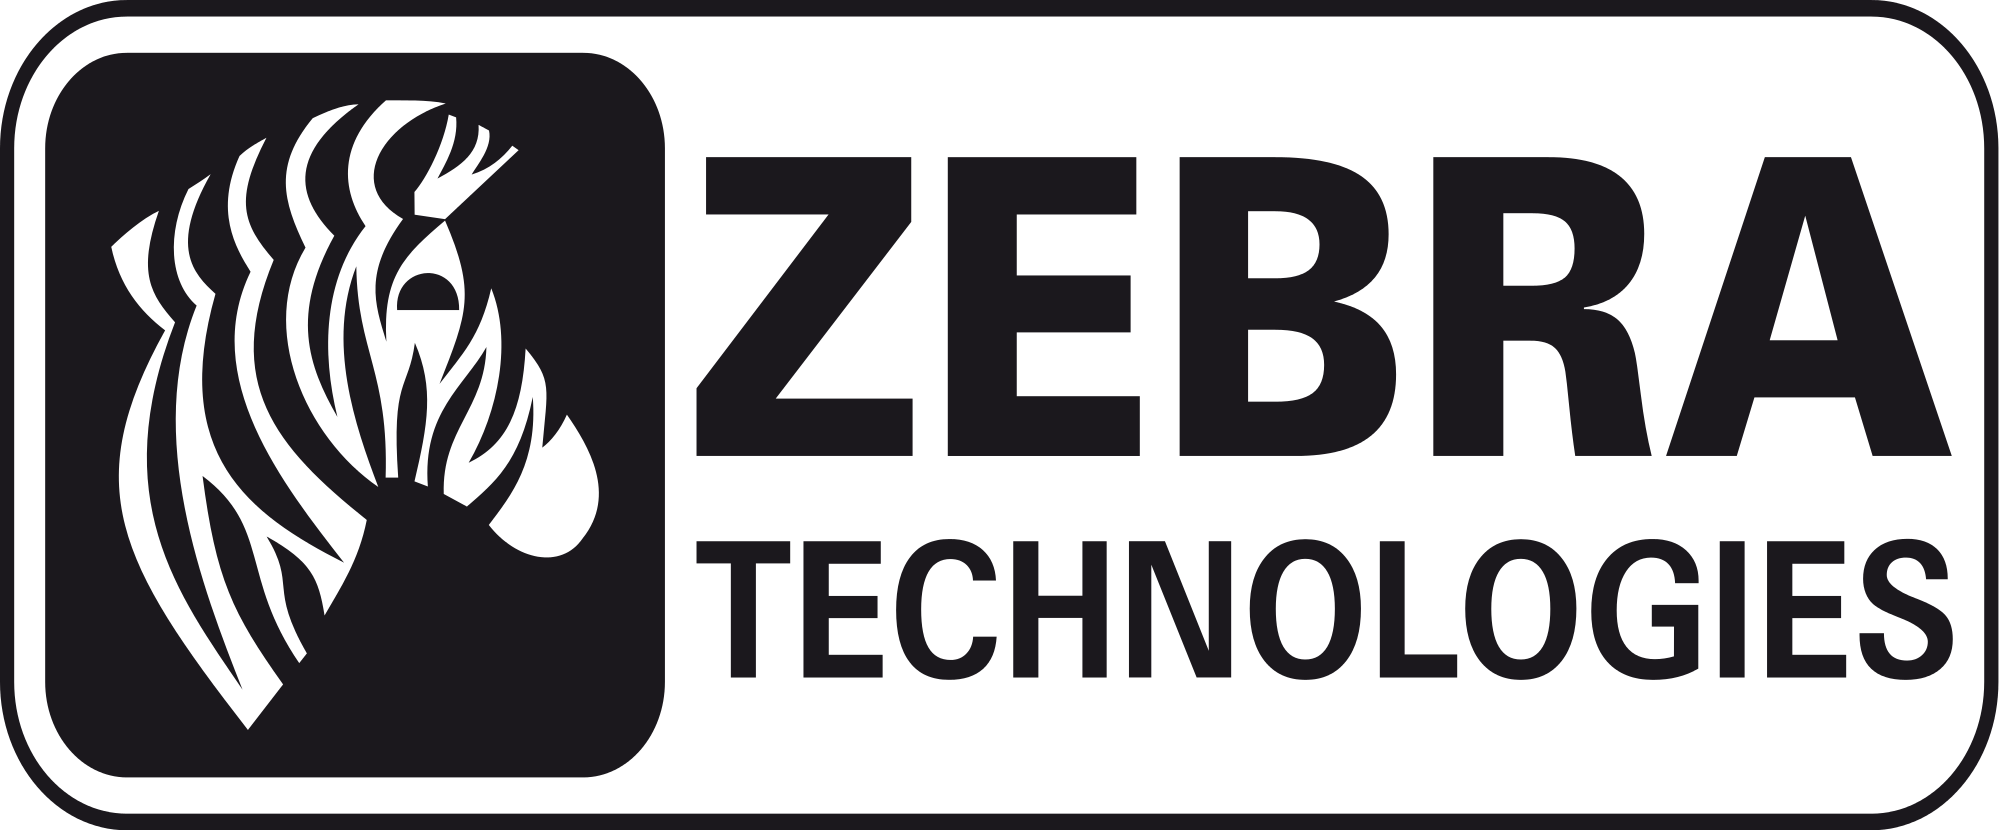 Zebra Technologies Logo - Team Solutions Group & Zebra Technologies